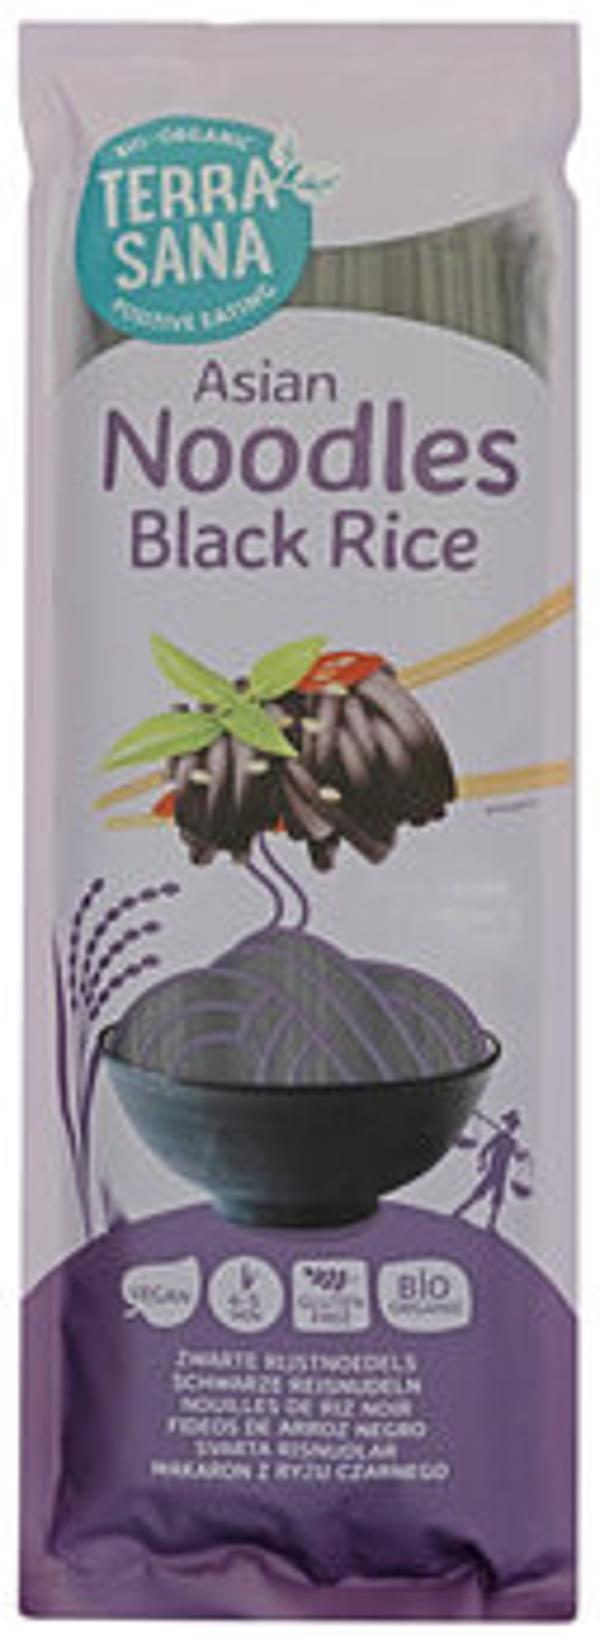 Produktfoto zu Schwarze Reisnudeln  250g